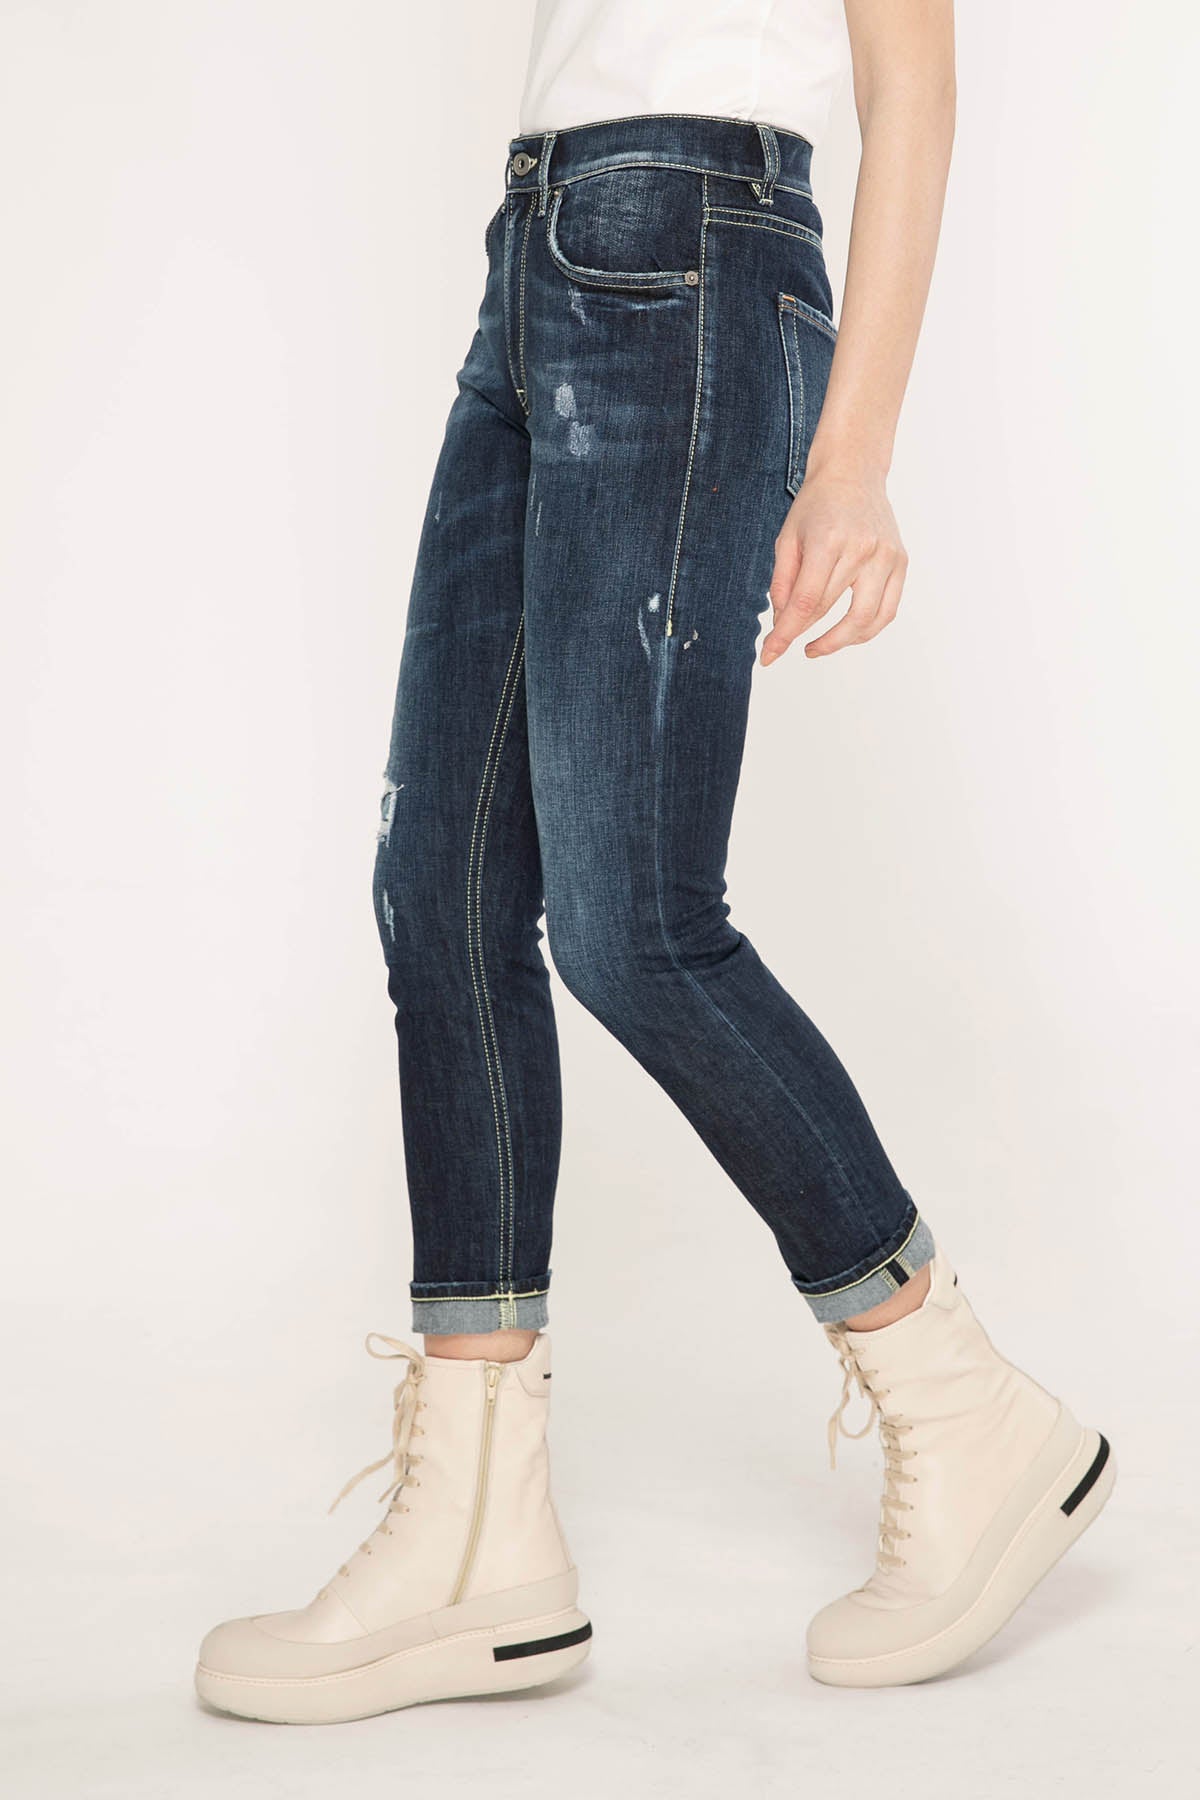 Dondup Mila Carrot Fit Jeans-Libas Trendy Fashion Store